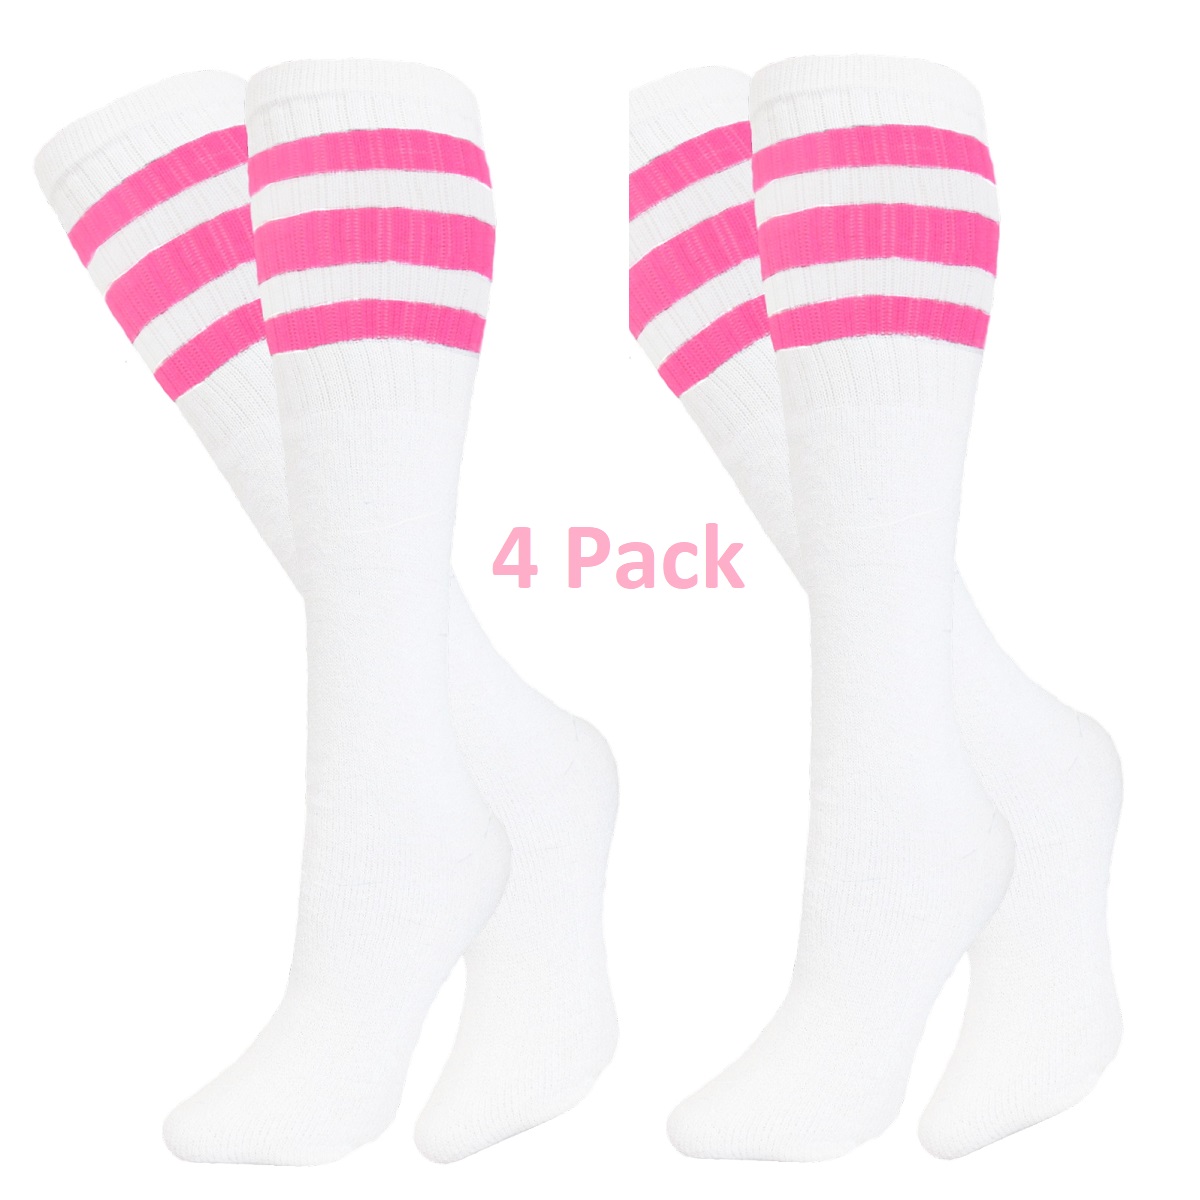 Baseball Softball Striped Tube Socks - White and Pink - set of 4 pairs